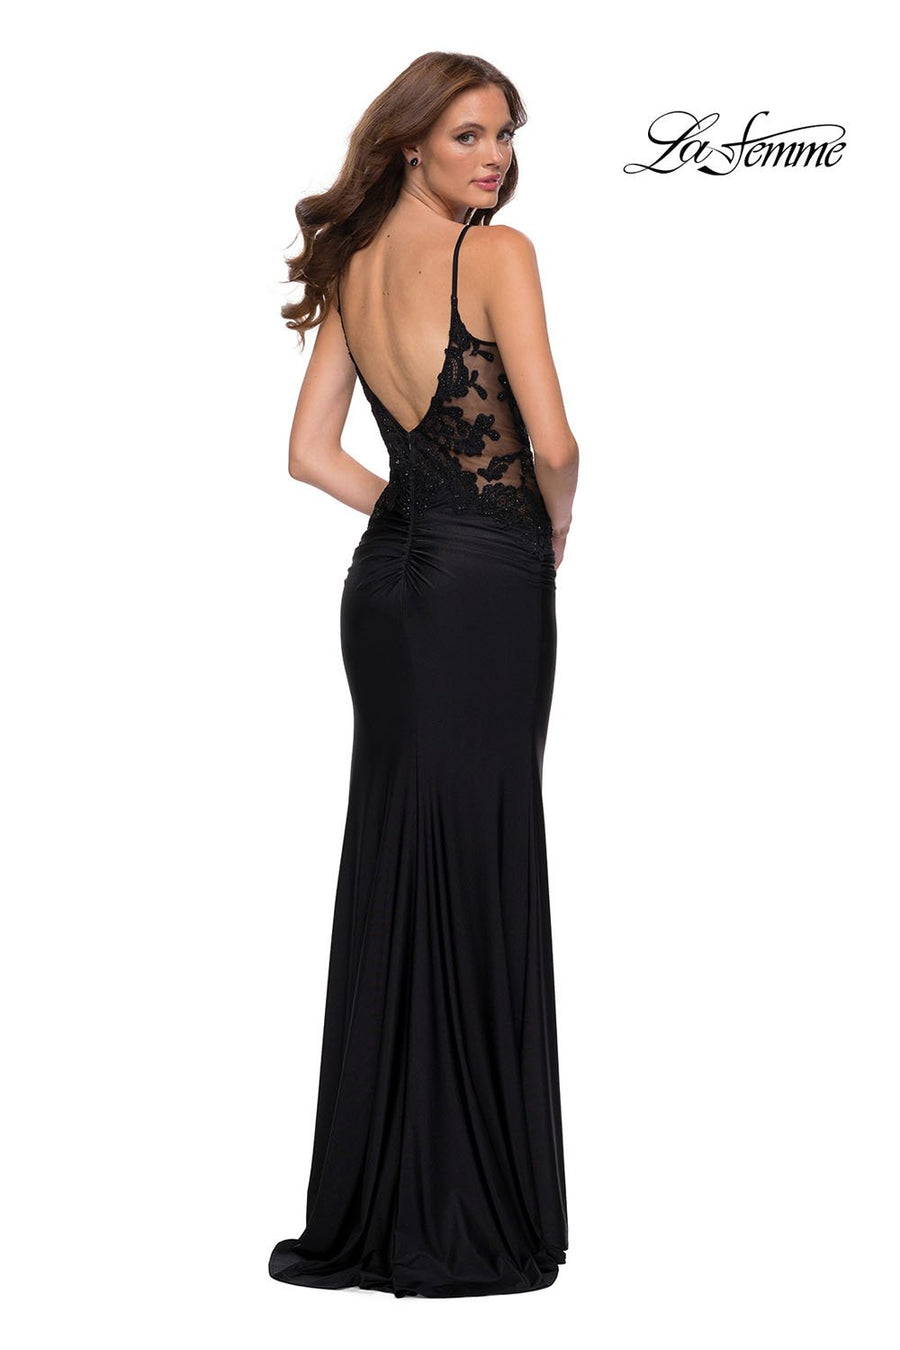 La Femme 29774 prom dress images.  La Femme 29774 is available in these colors: Black.